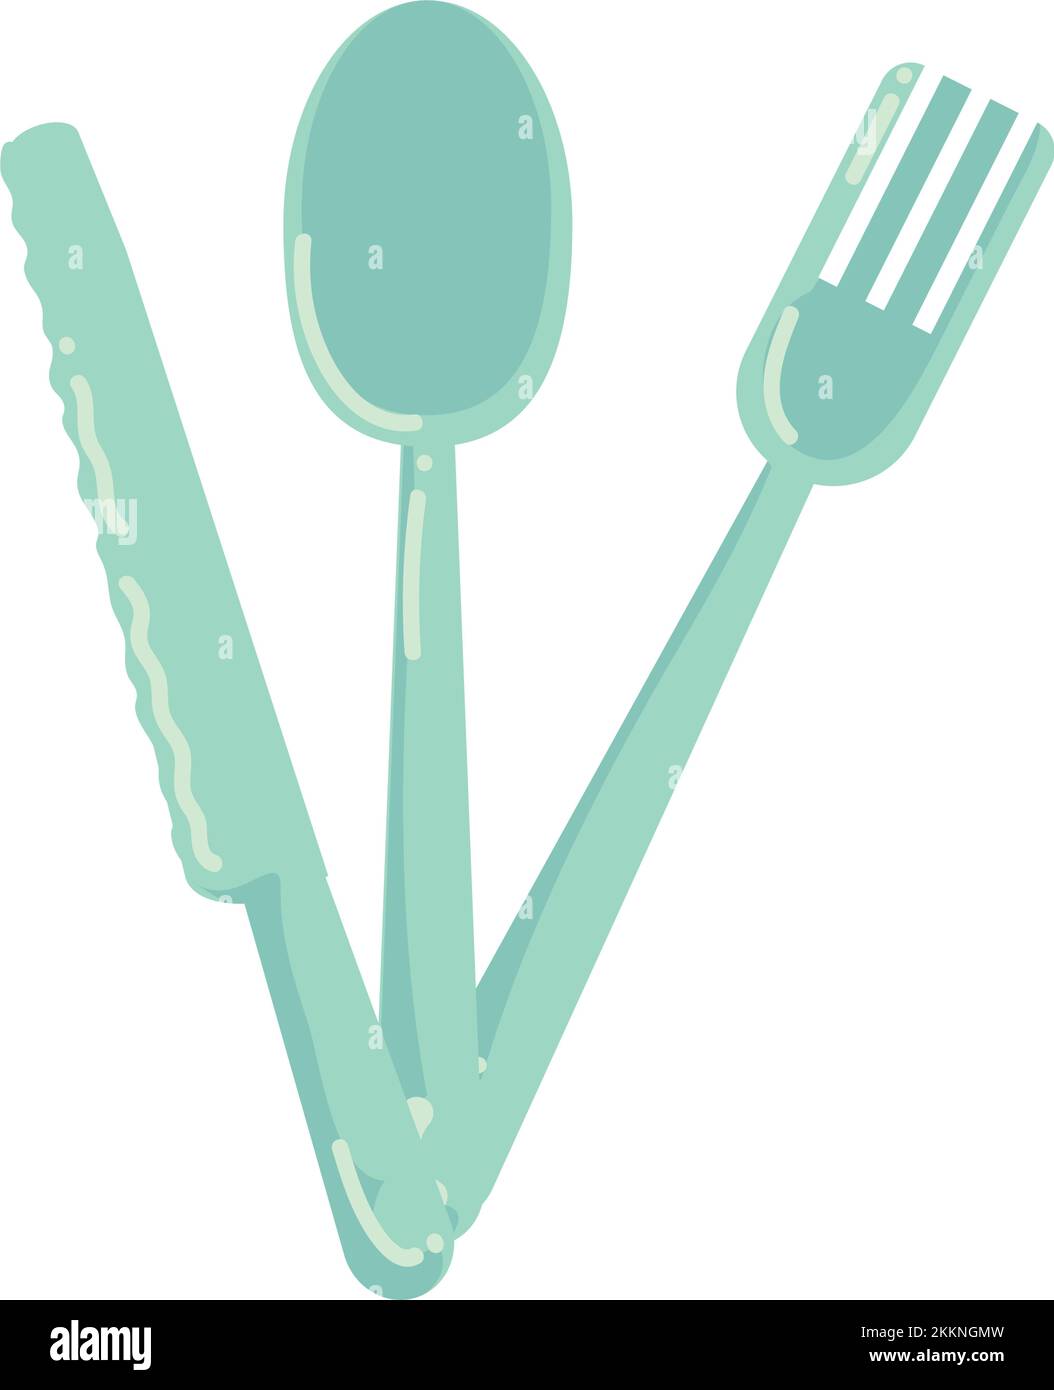 plastic cutlery design Stock Vector